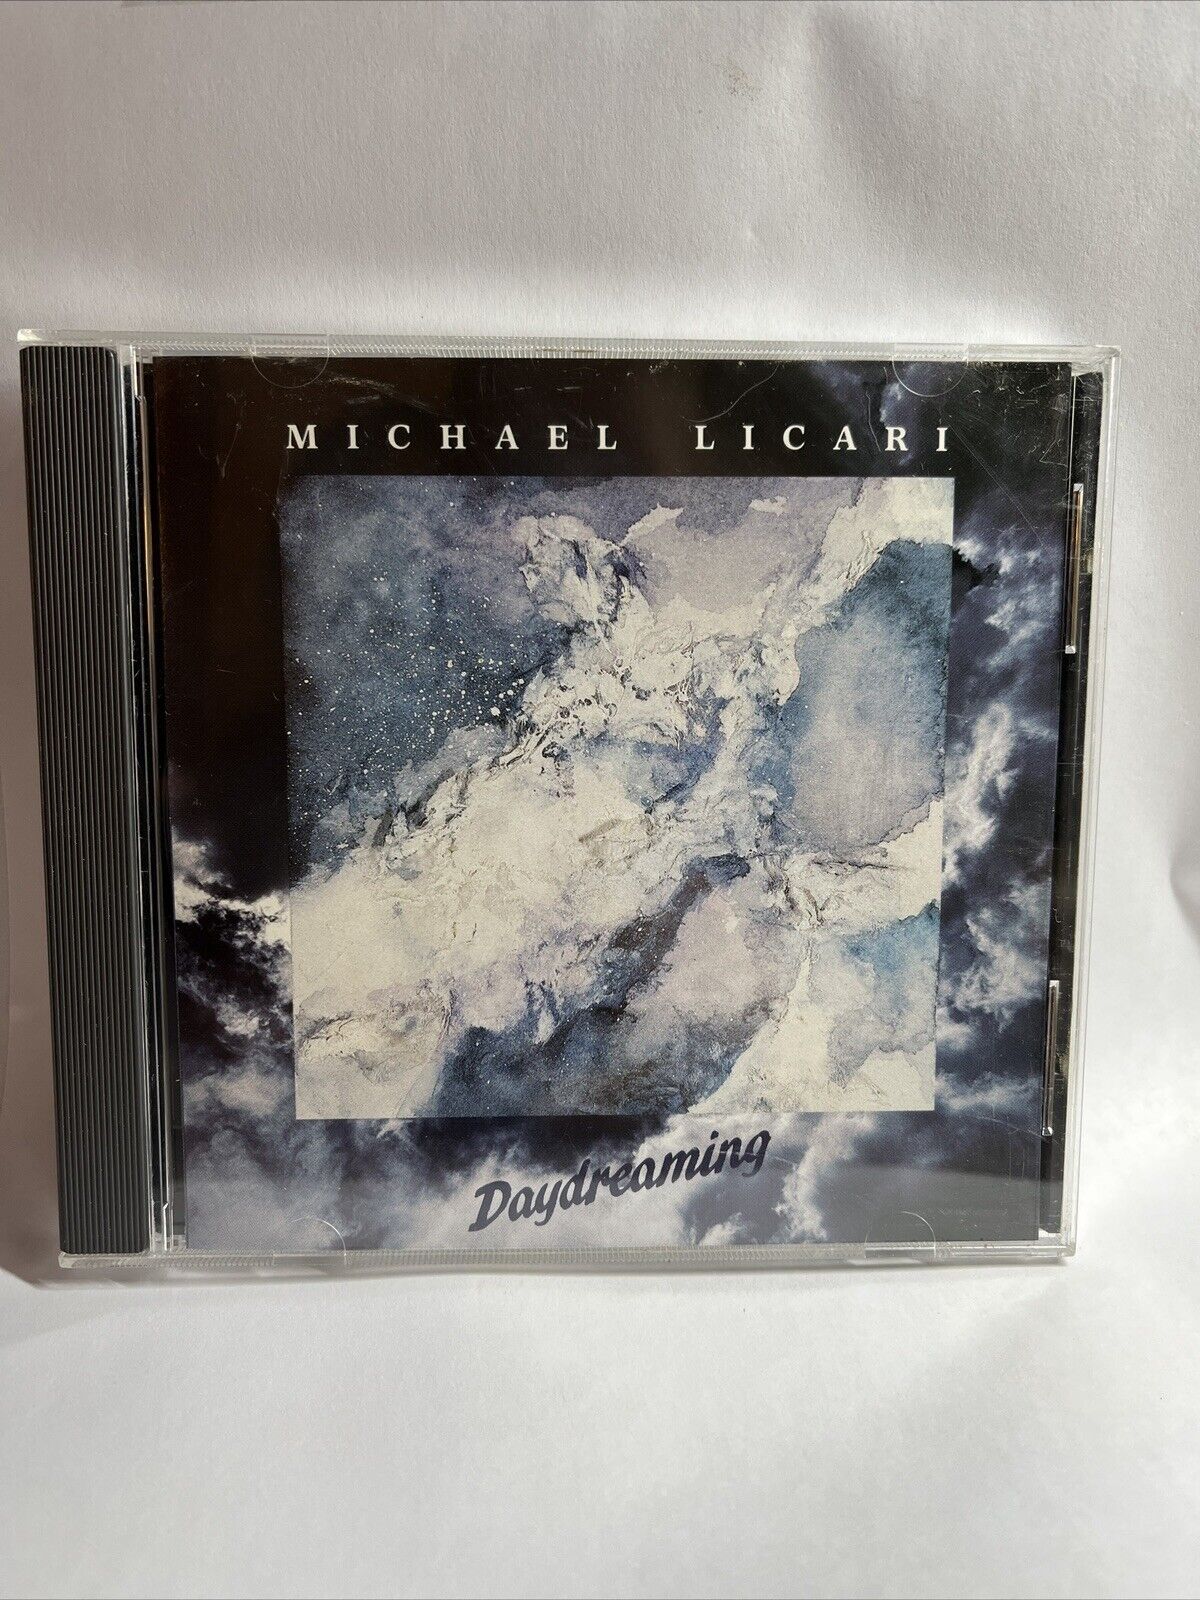 MICHAEL LICARI - Daydreaming CD 1990 Like New